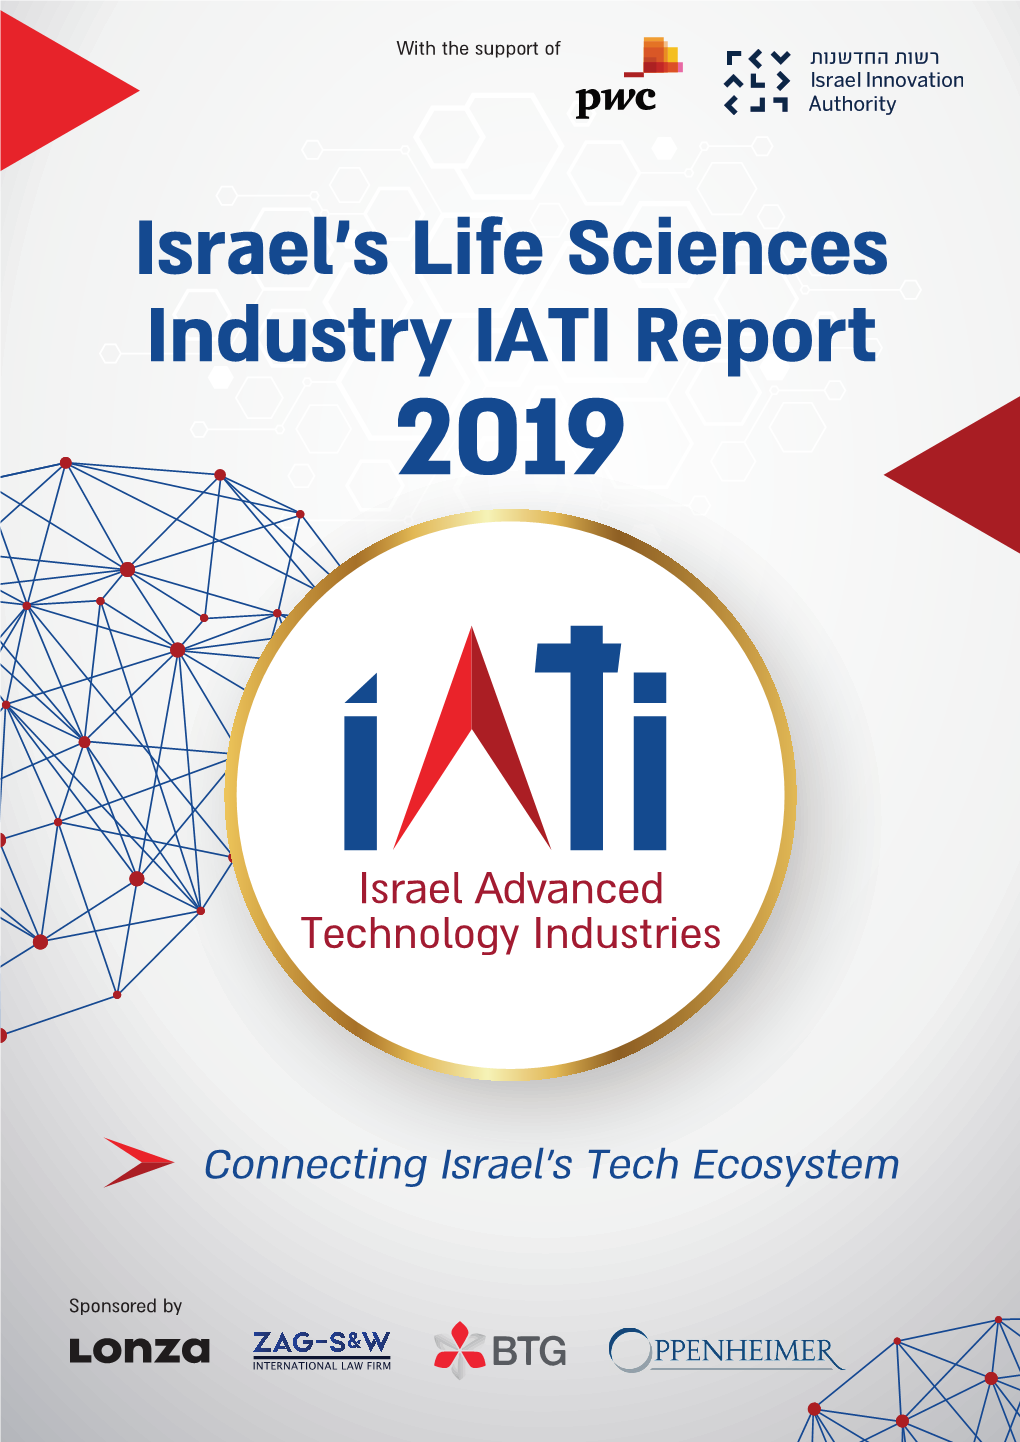 Israel's Life Sciences Industry IATI Report 2019